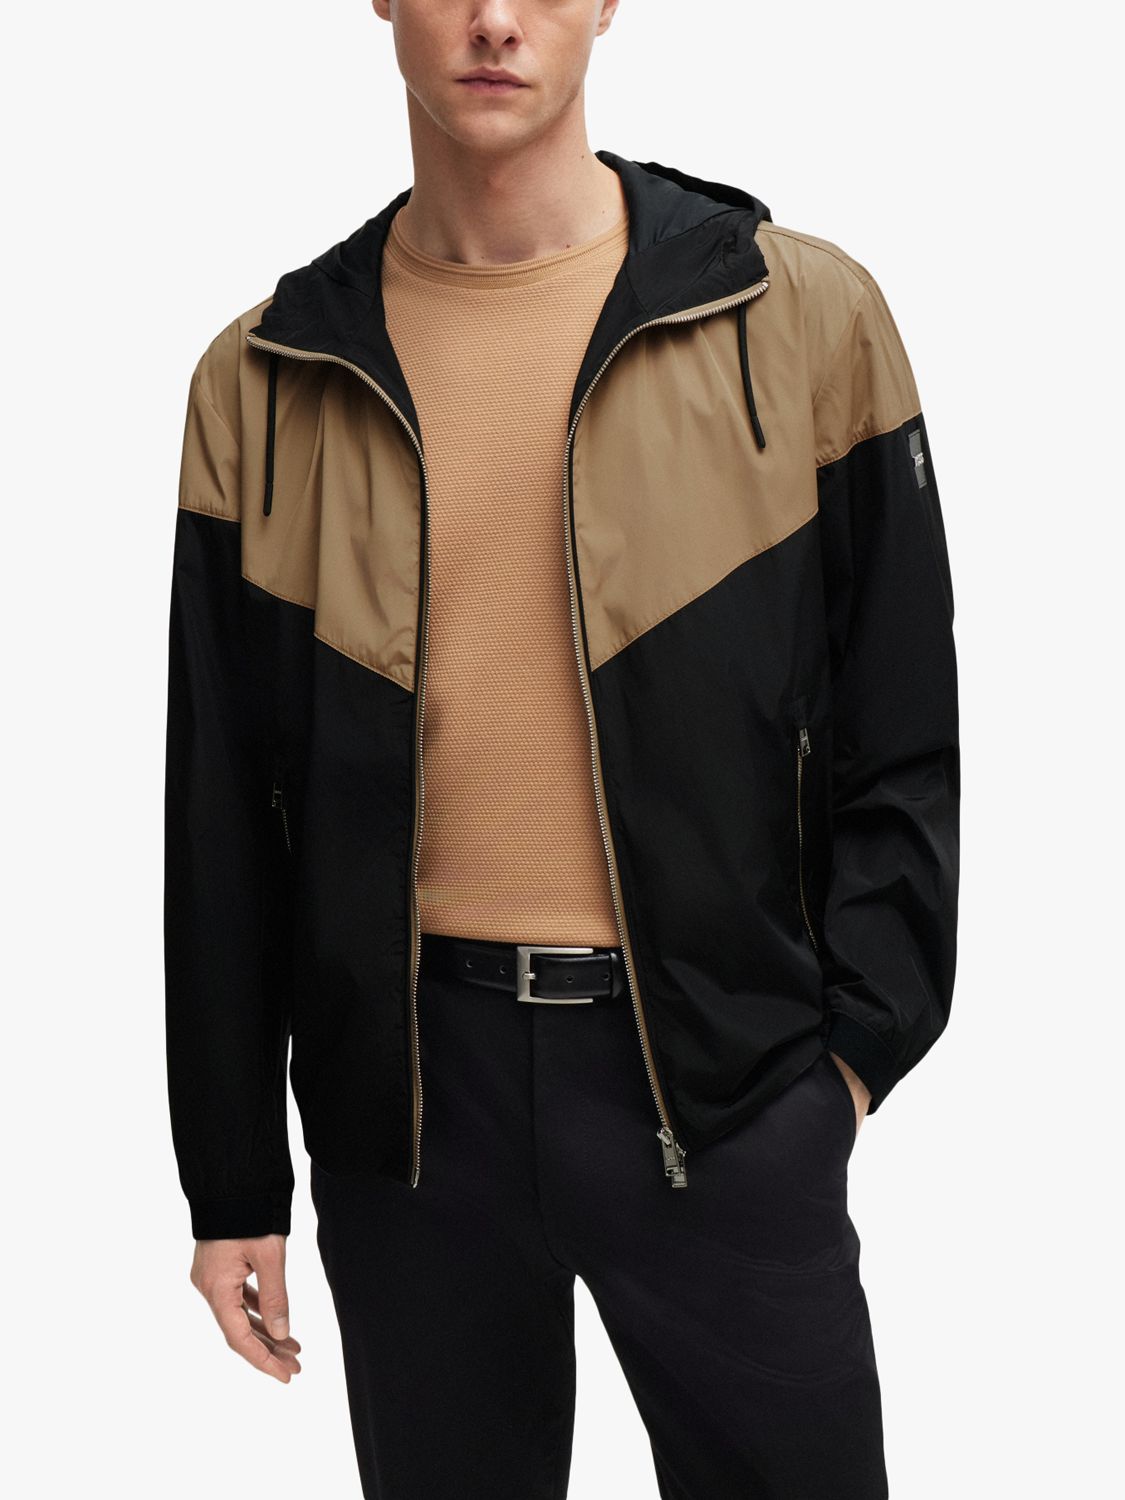 BOSS Cireno Colour Block Hooded Jacket, Medium Beige/Black, 38R